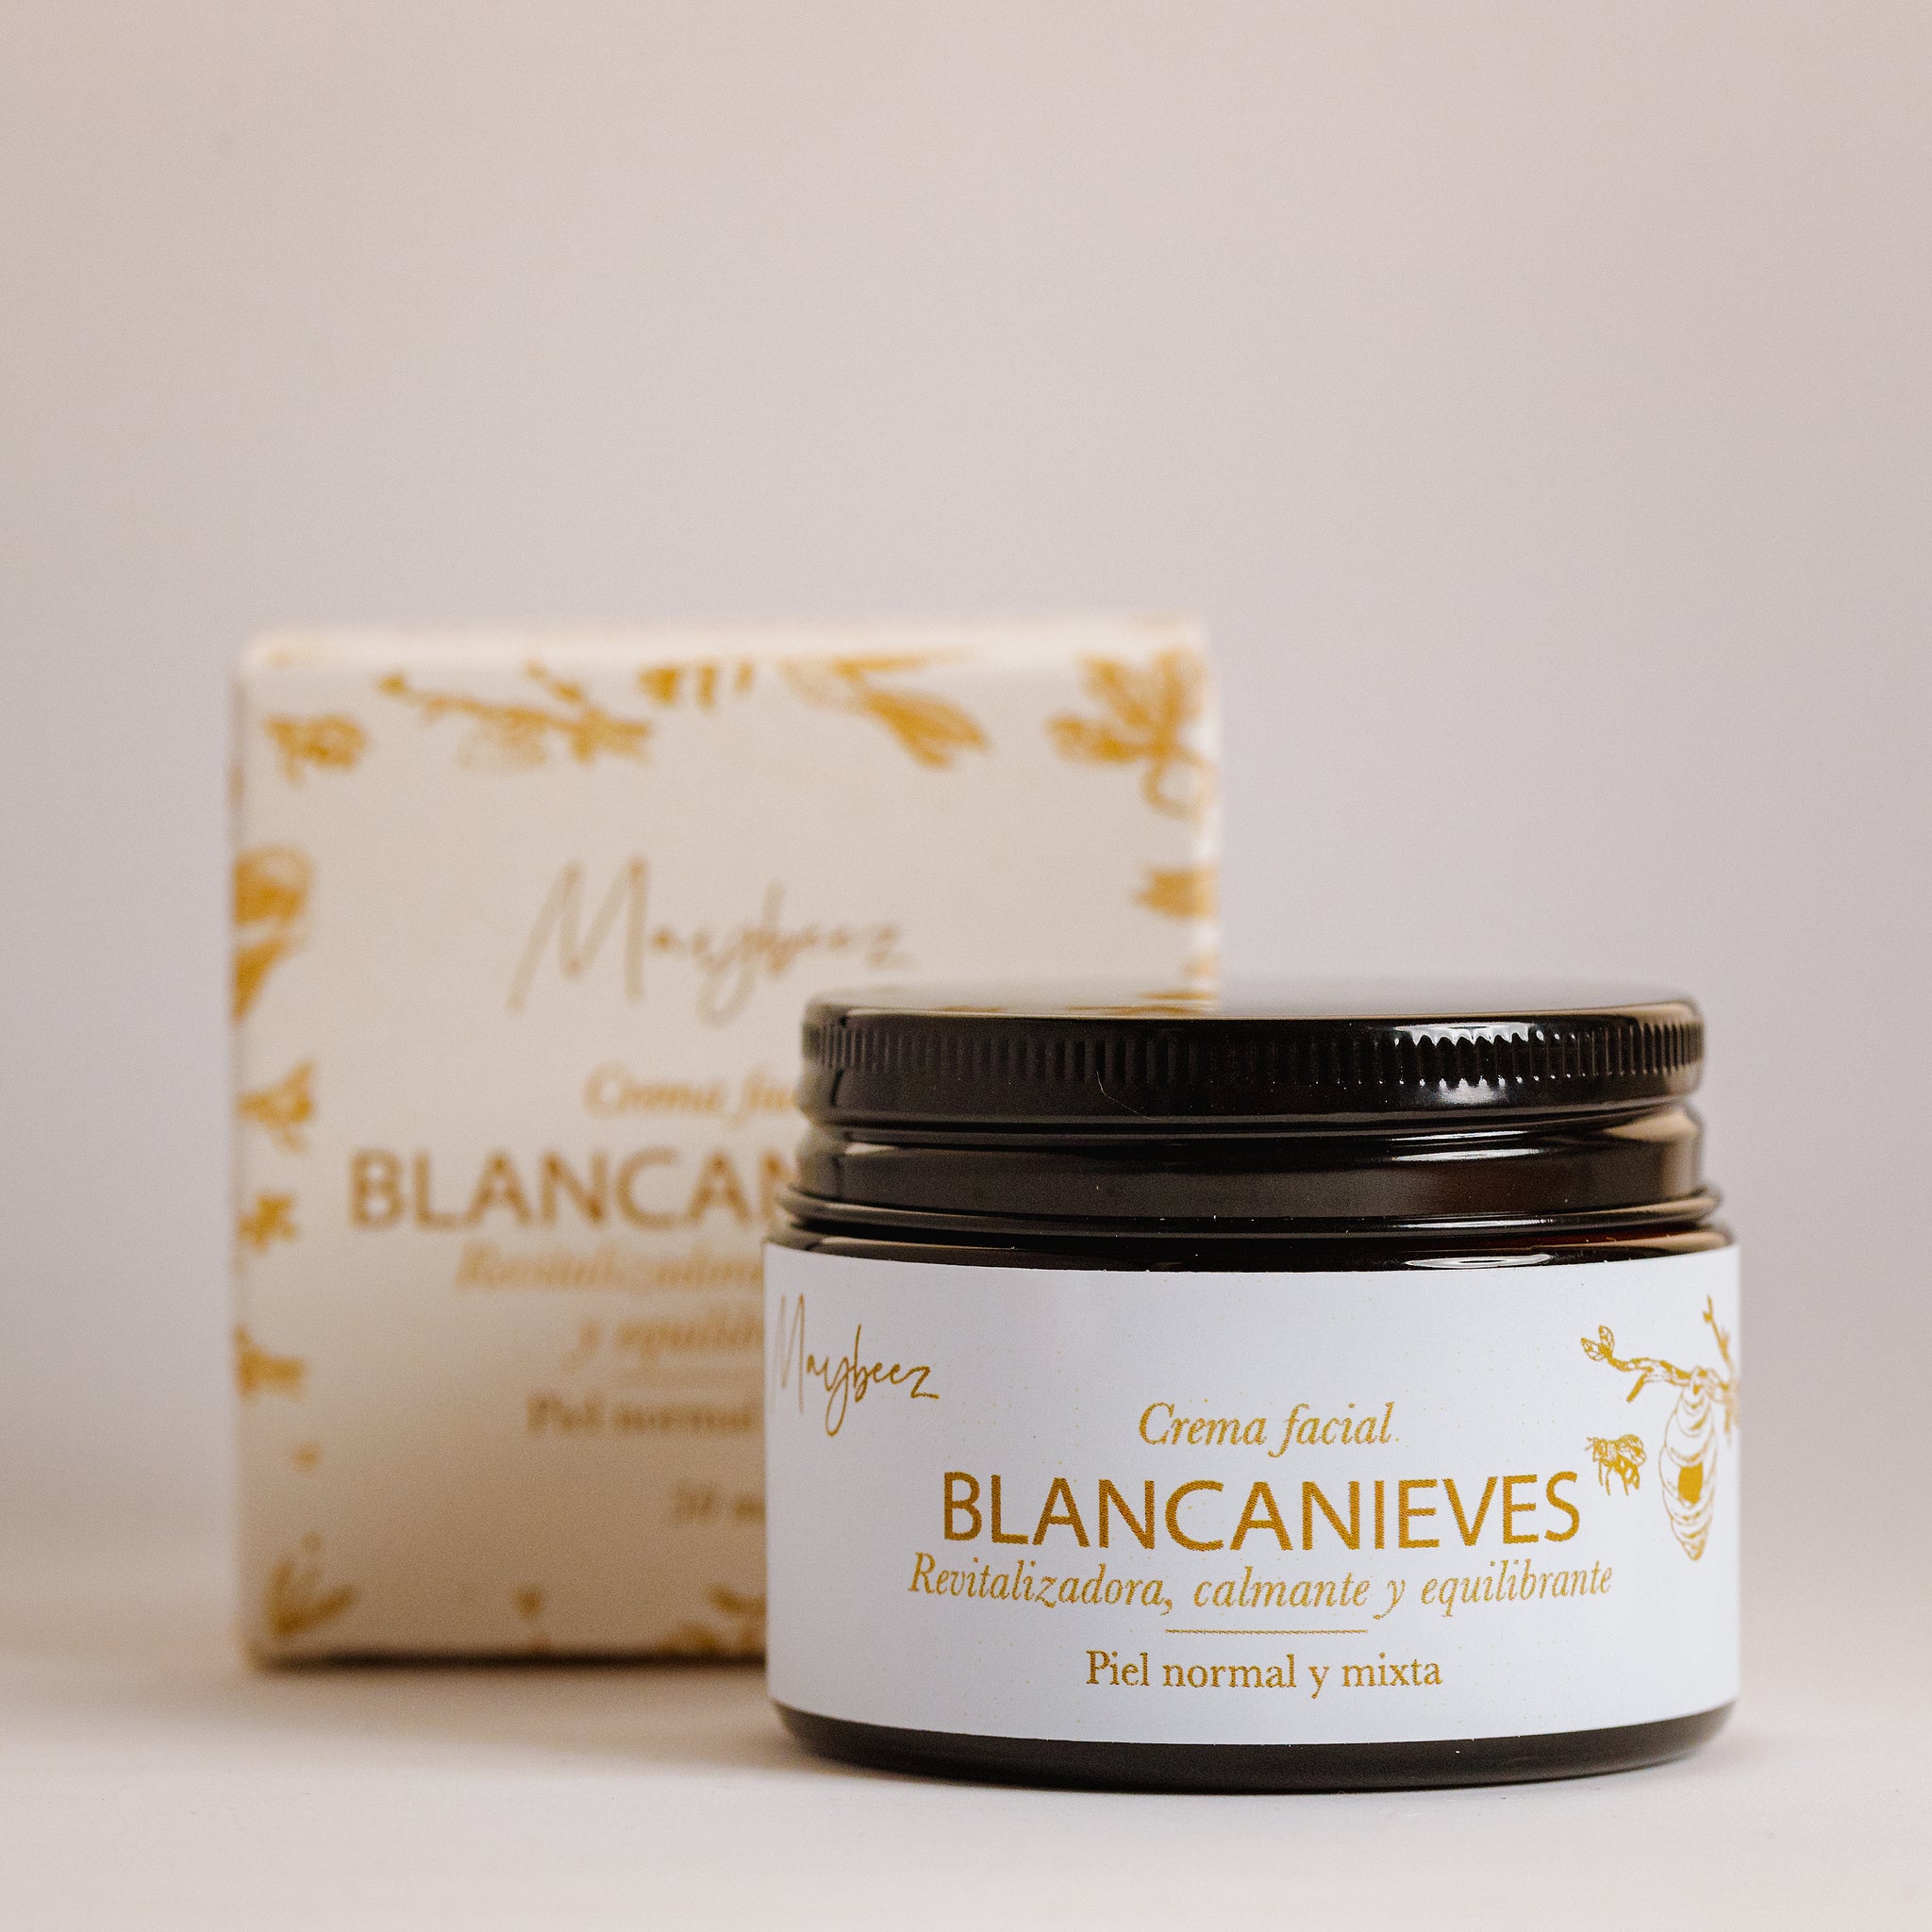 Crema facial "Blancanieves"